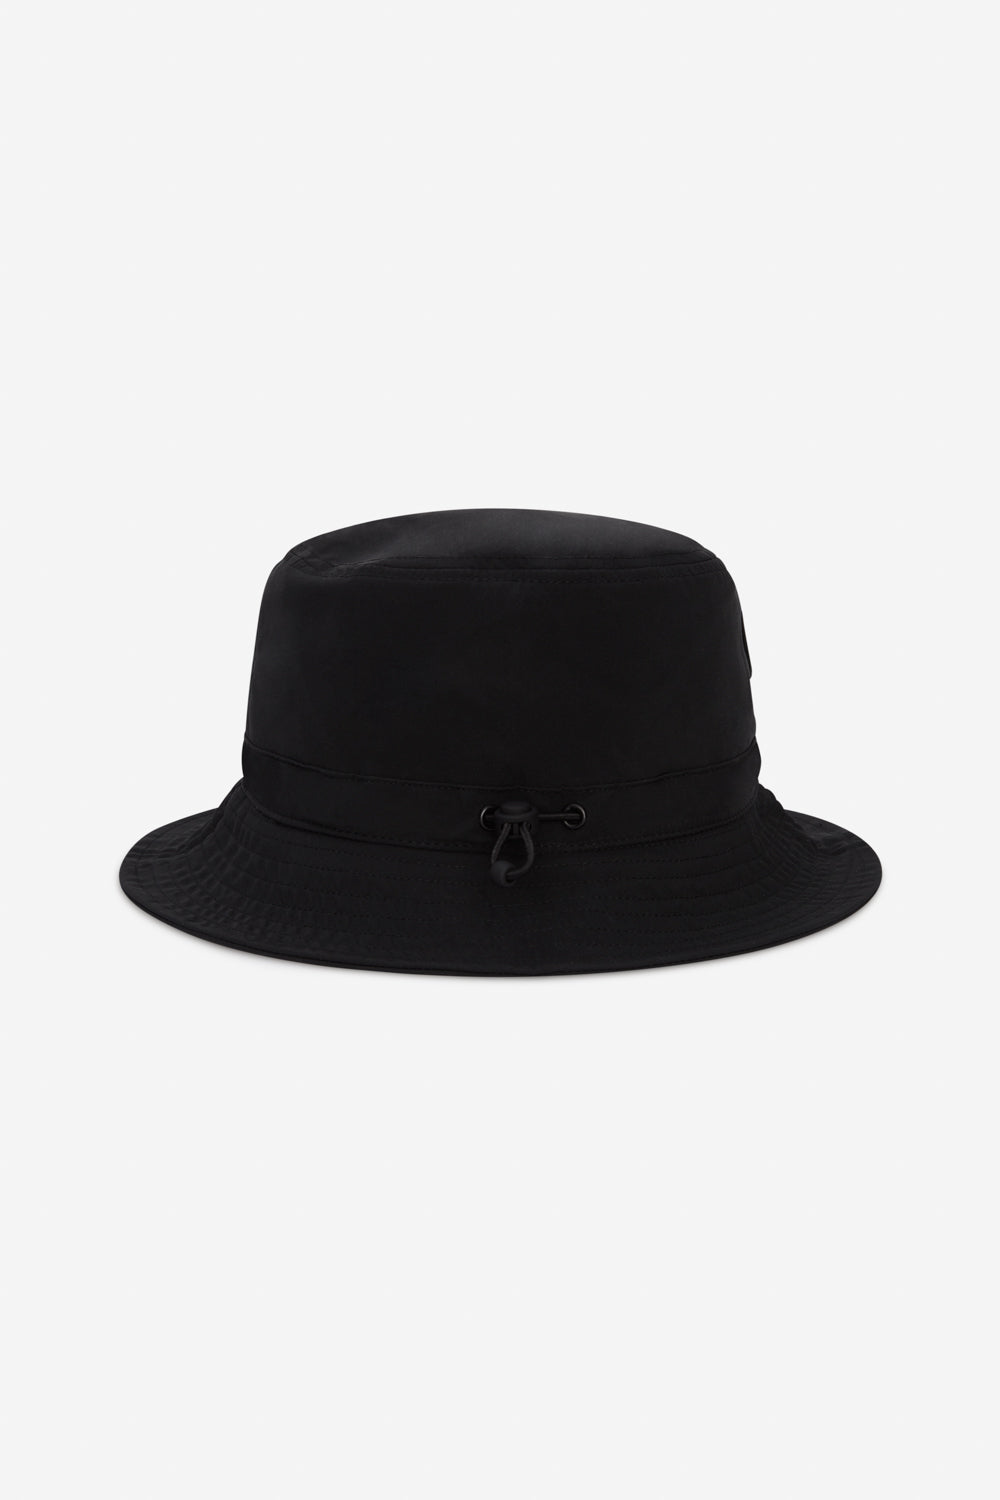 BLACK BAS BUCKET HAT 